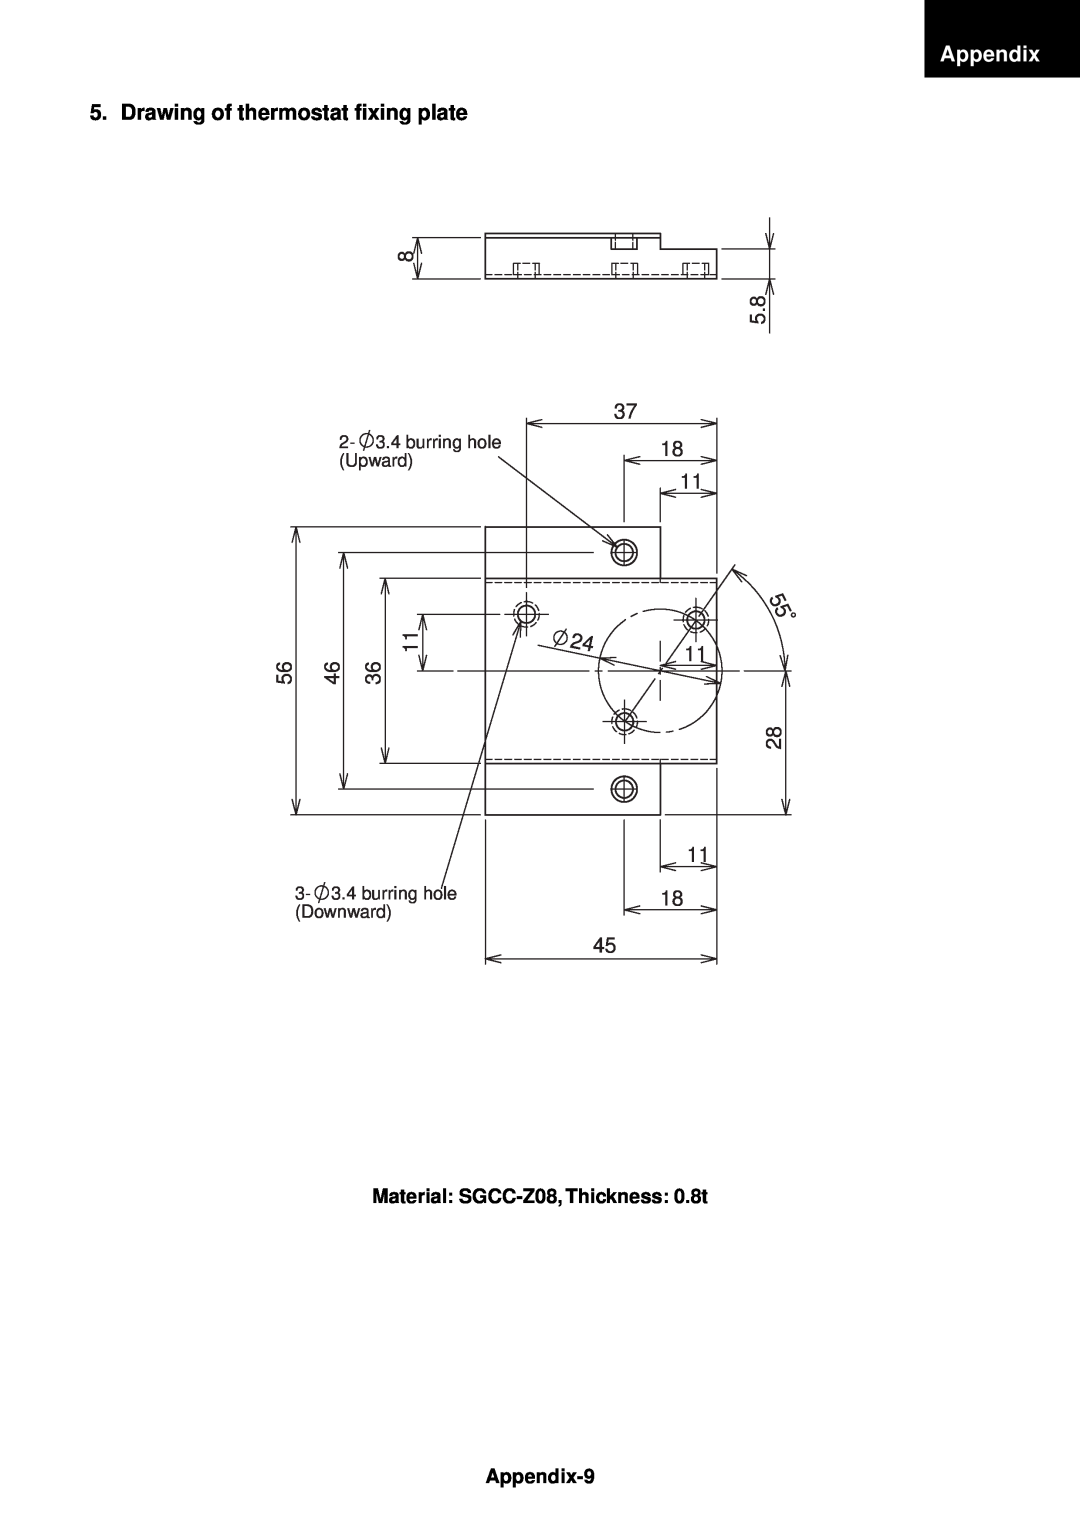 Toshiba RAS-B10EKVP-E Appendix, Drawing of thermostat fixing plate, 8 5.8, 11 28 11 18, Material: SGCC-Z08,Thickness: 0.8t 